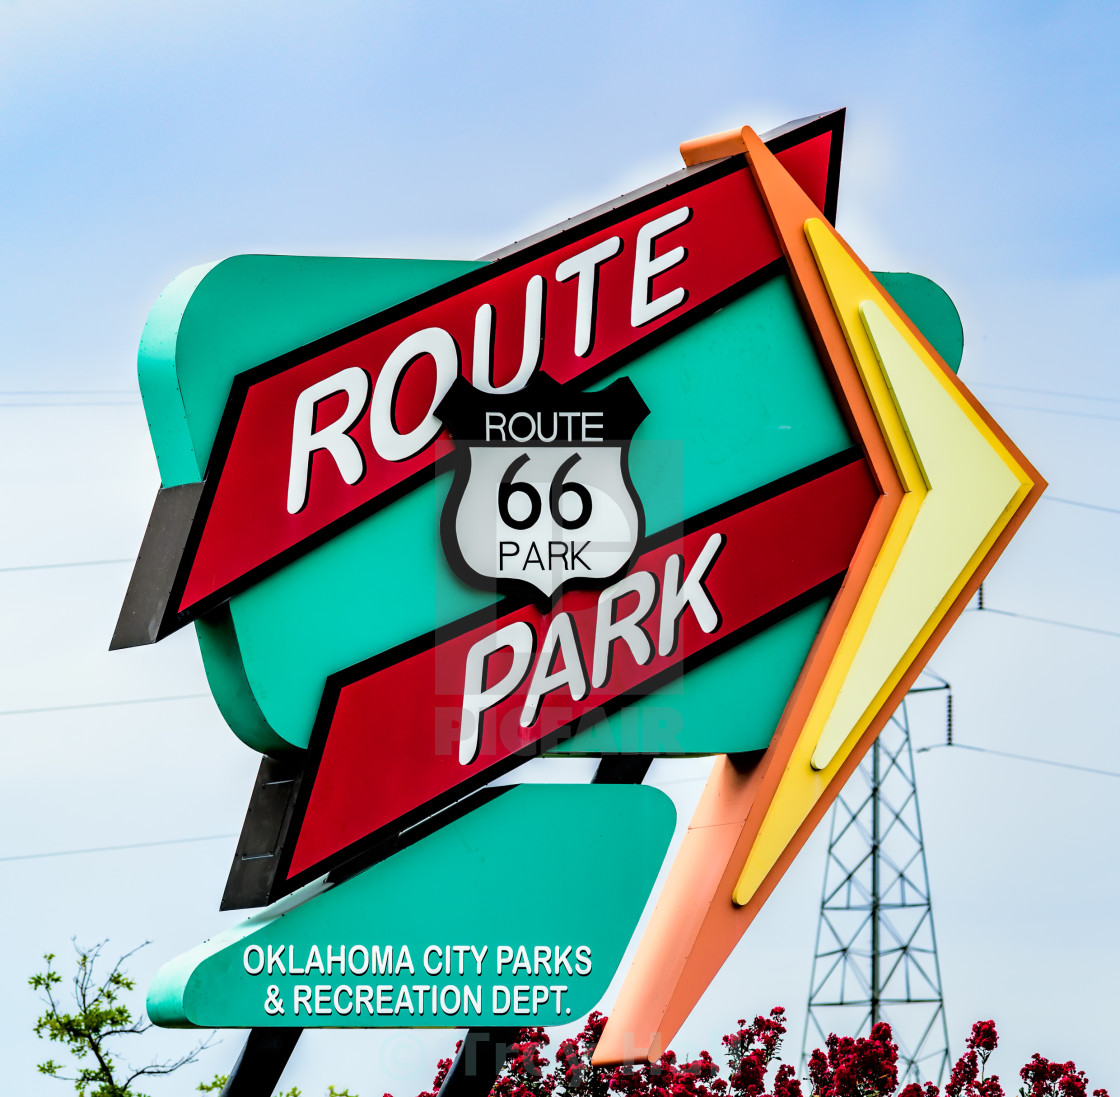 "Route 66 Park" stock image